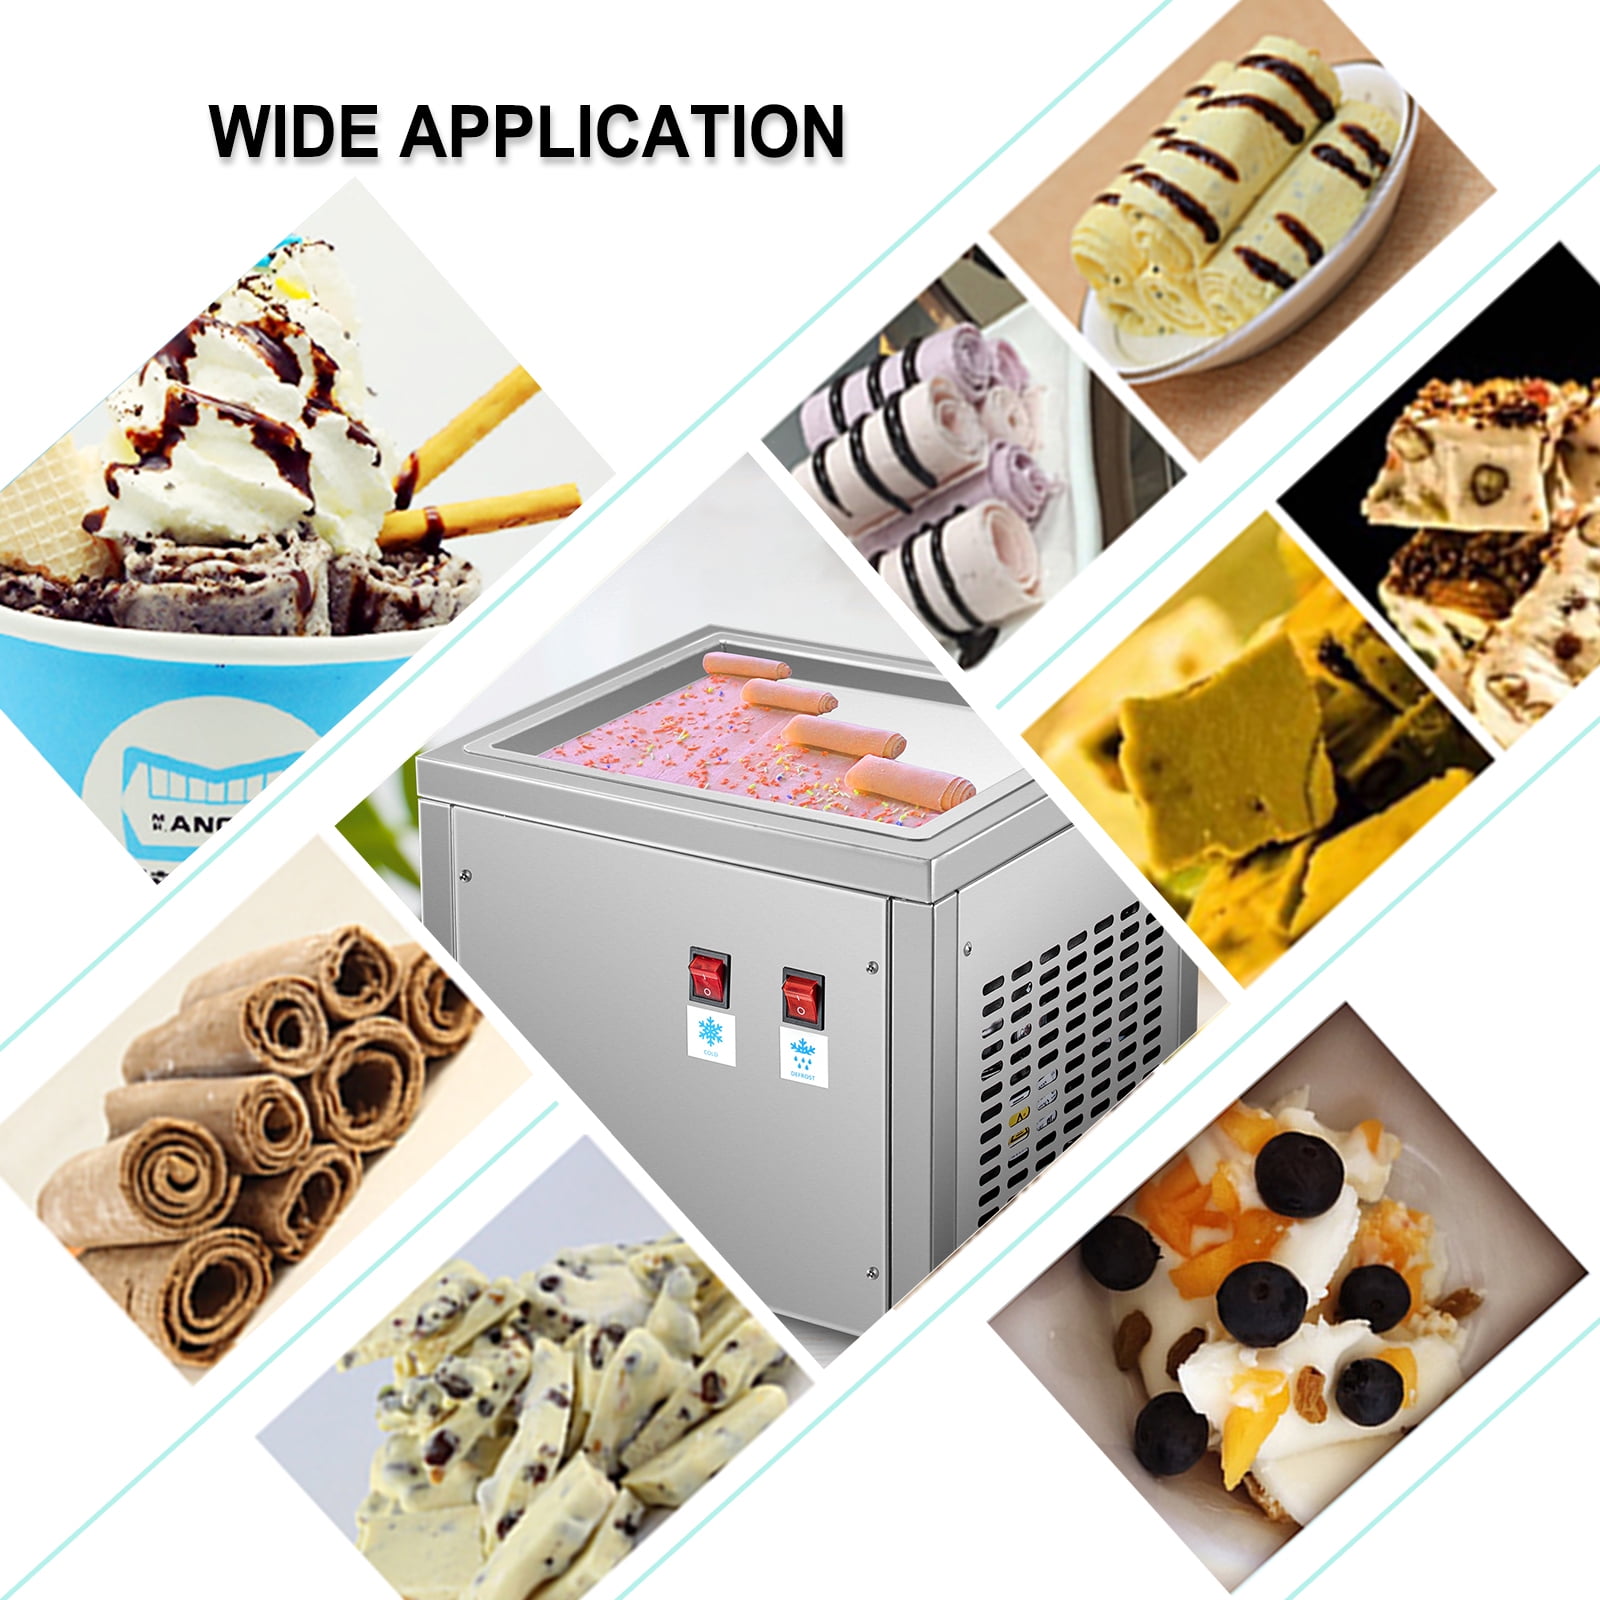  Mvckyi Fried Ice Cream Roll Machine, 22 Inch Commercial Ice  Roll Maker, Commercial Roll Ice Cream Maker Machine, Stir Fried Yogurt  Machine, Temperature Control, for Restaurant, Snack Bar: Home & Kitchen